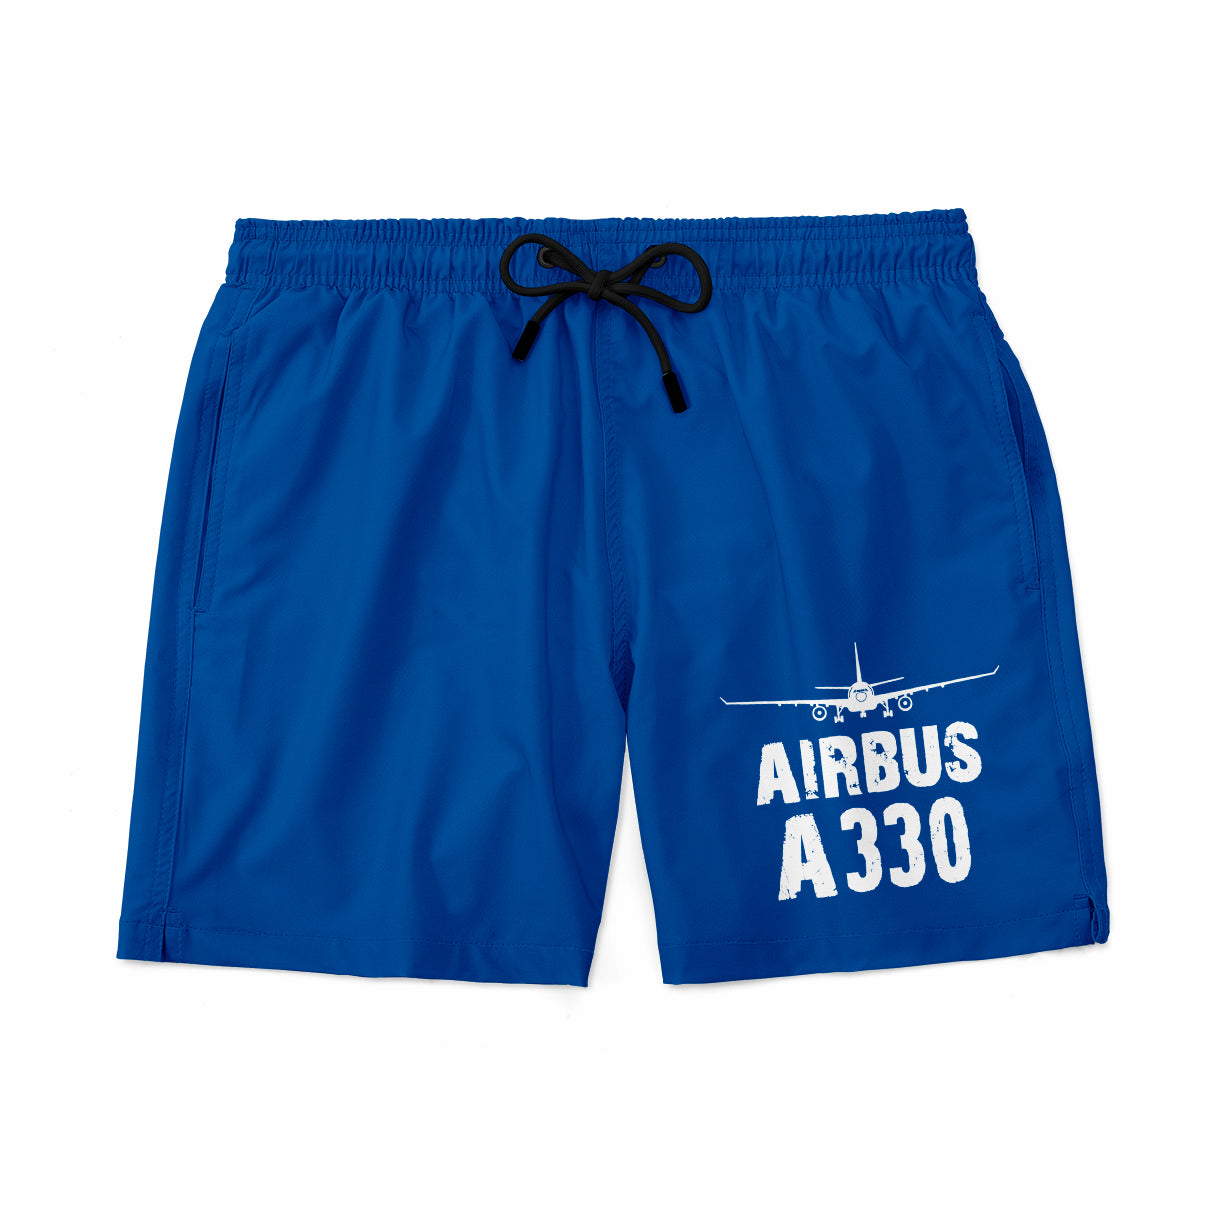 Airbus A330 & Plane Designed Swim Trunks & Shorts